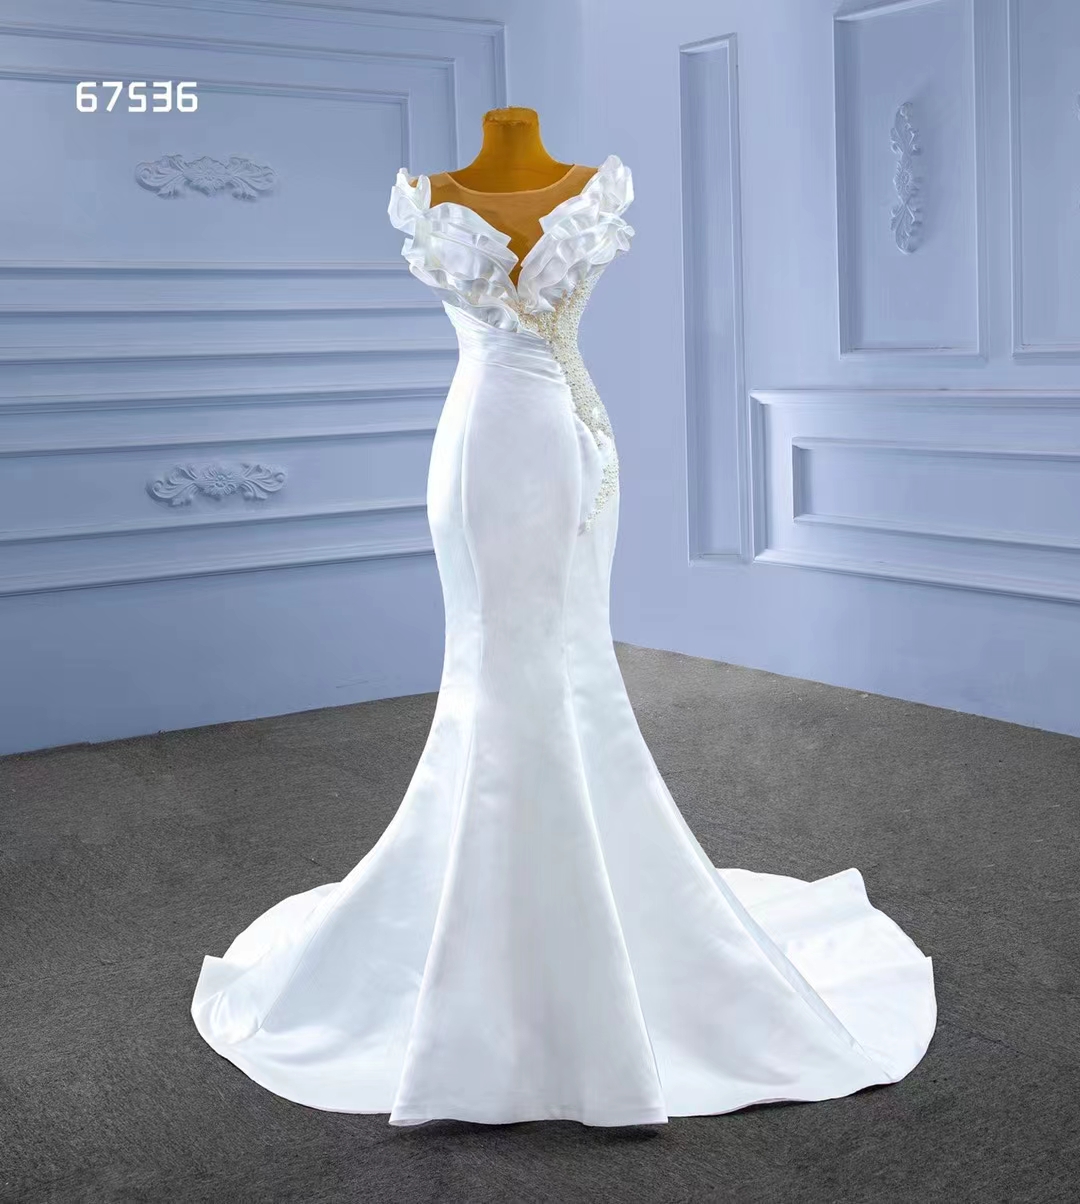 Vestido de noiva de sereia sexy cetim de cetim branca design de tendência parcial sm67536